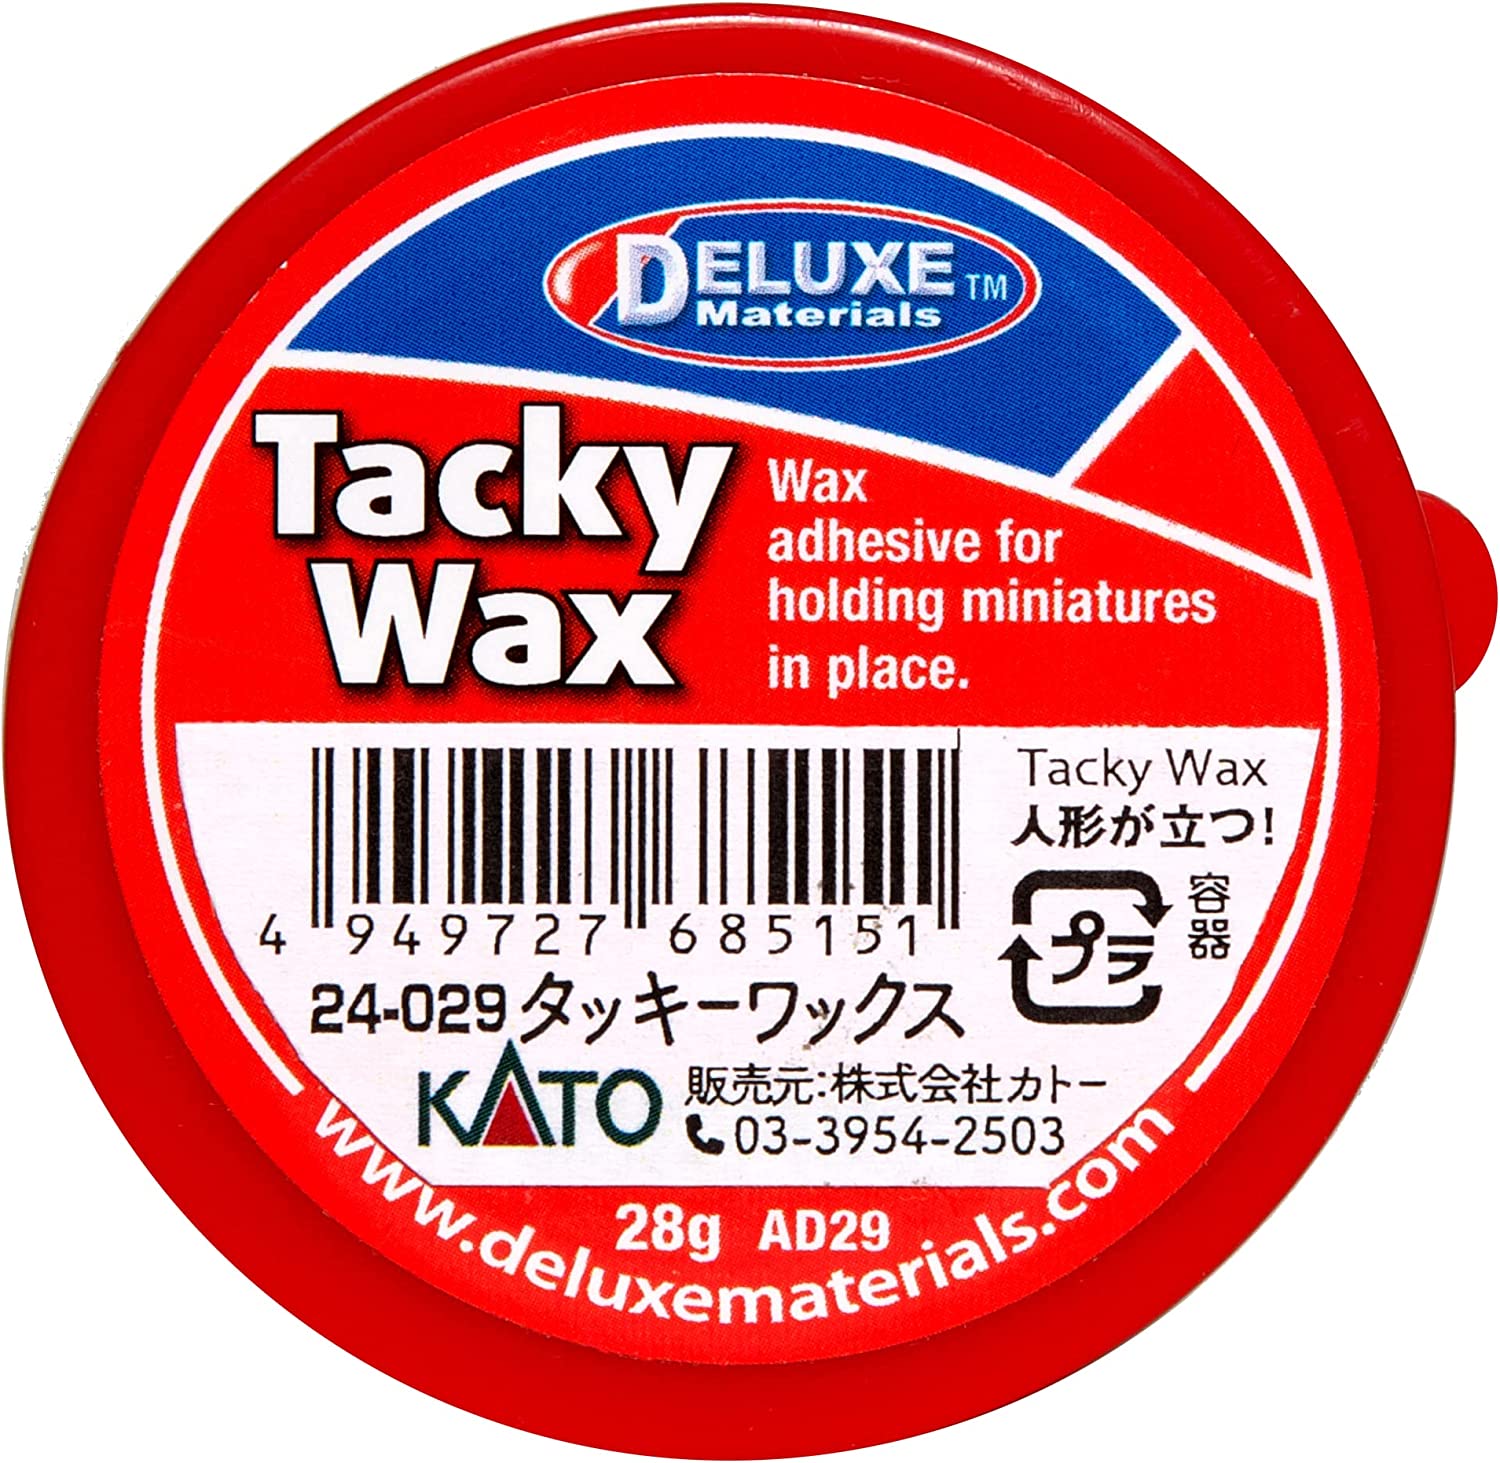 Tacky Wax Deluxe Materials